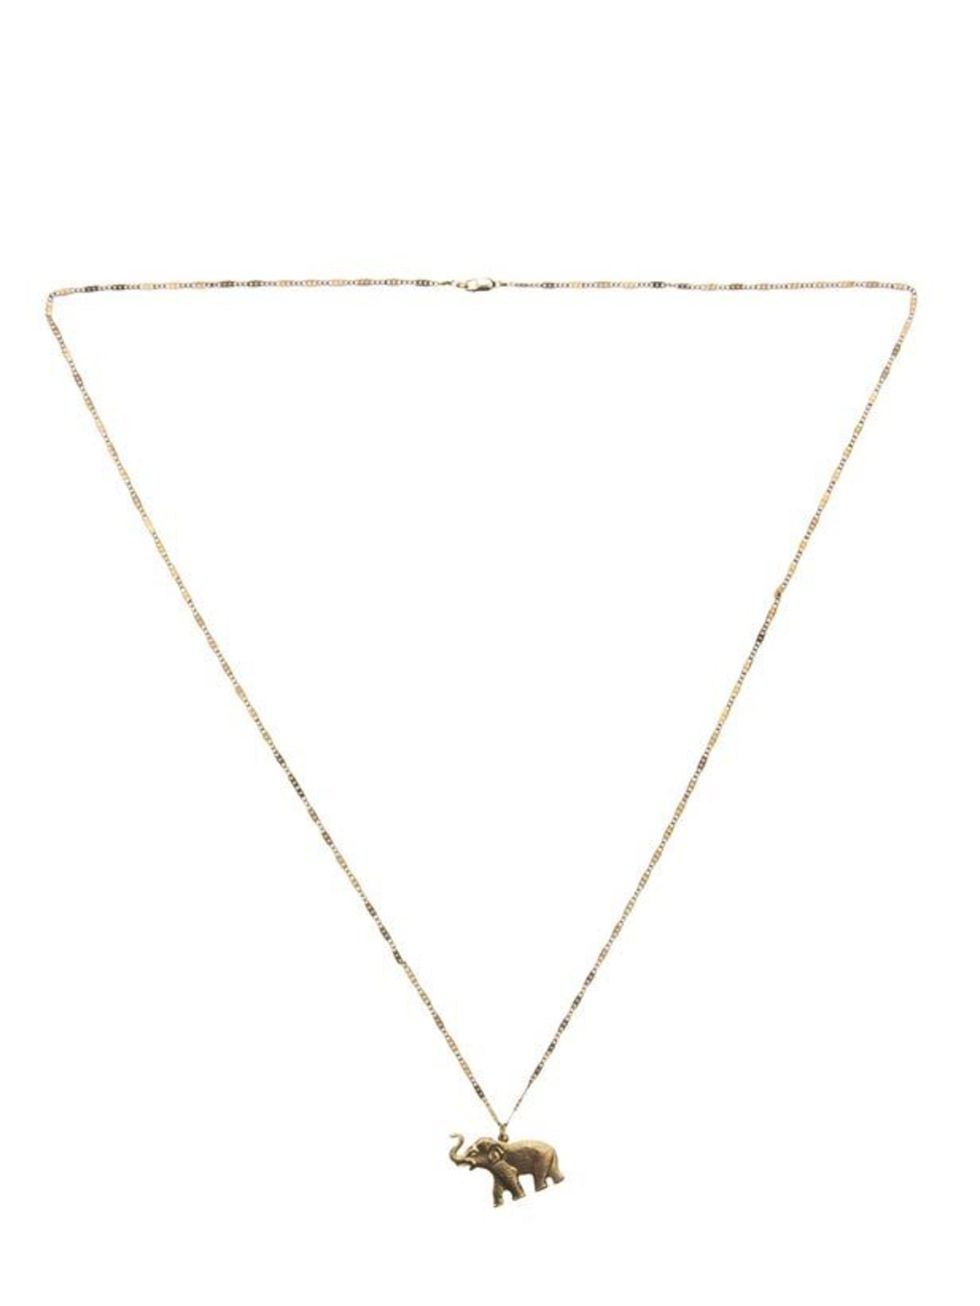 <p>Vanessa Mooney elephant necklace, £35, at <a href="http://www.farfetch.com/shopping/women/search/schid-76616e65737361206d6f6f656e79/item10053525.aspx">Farfetch</a></p>